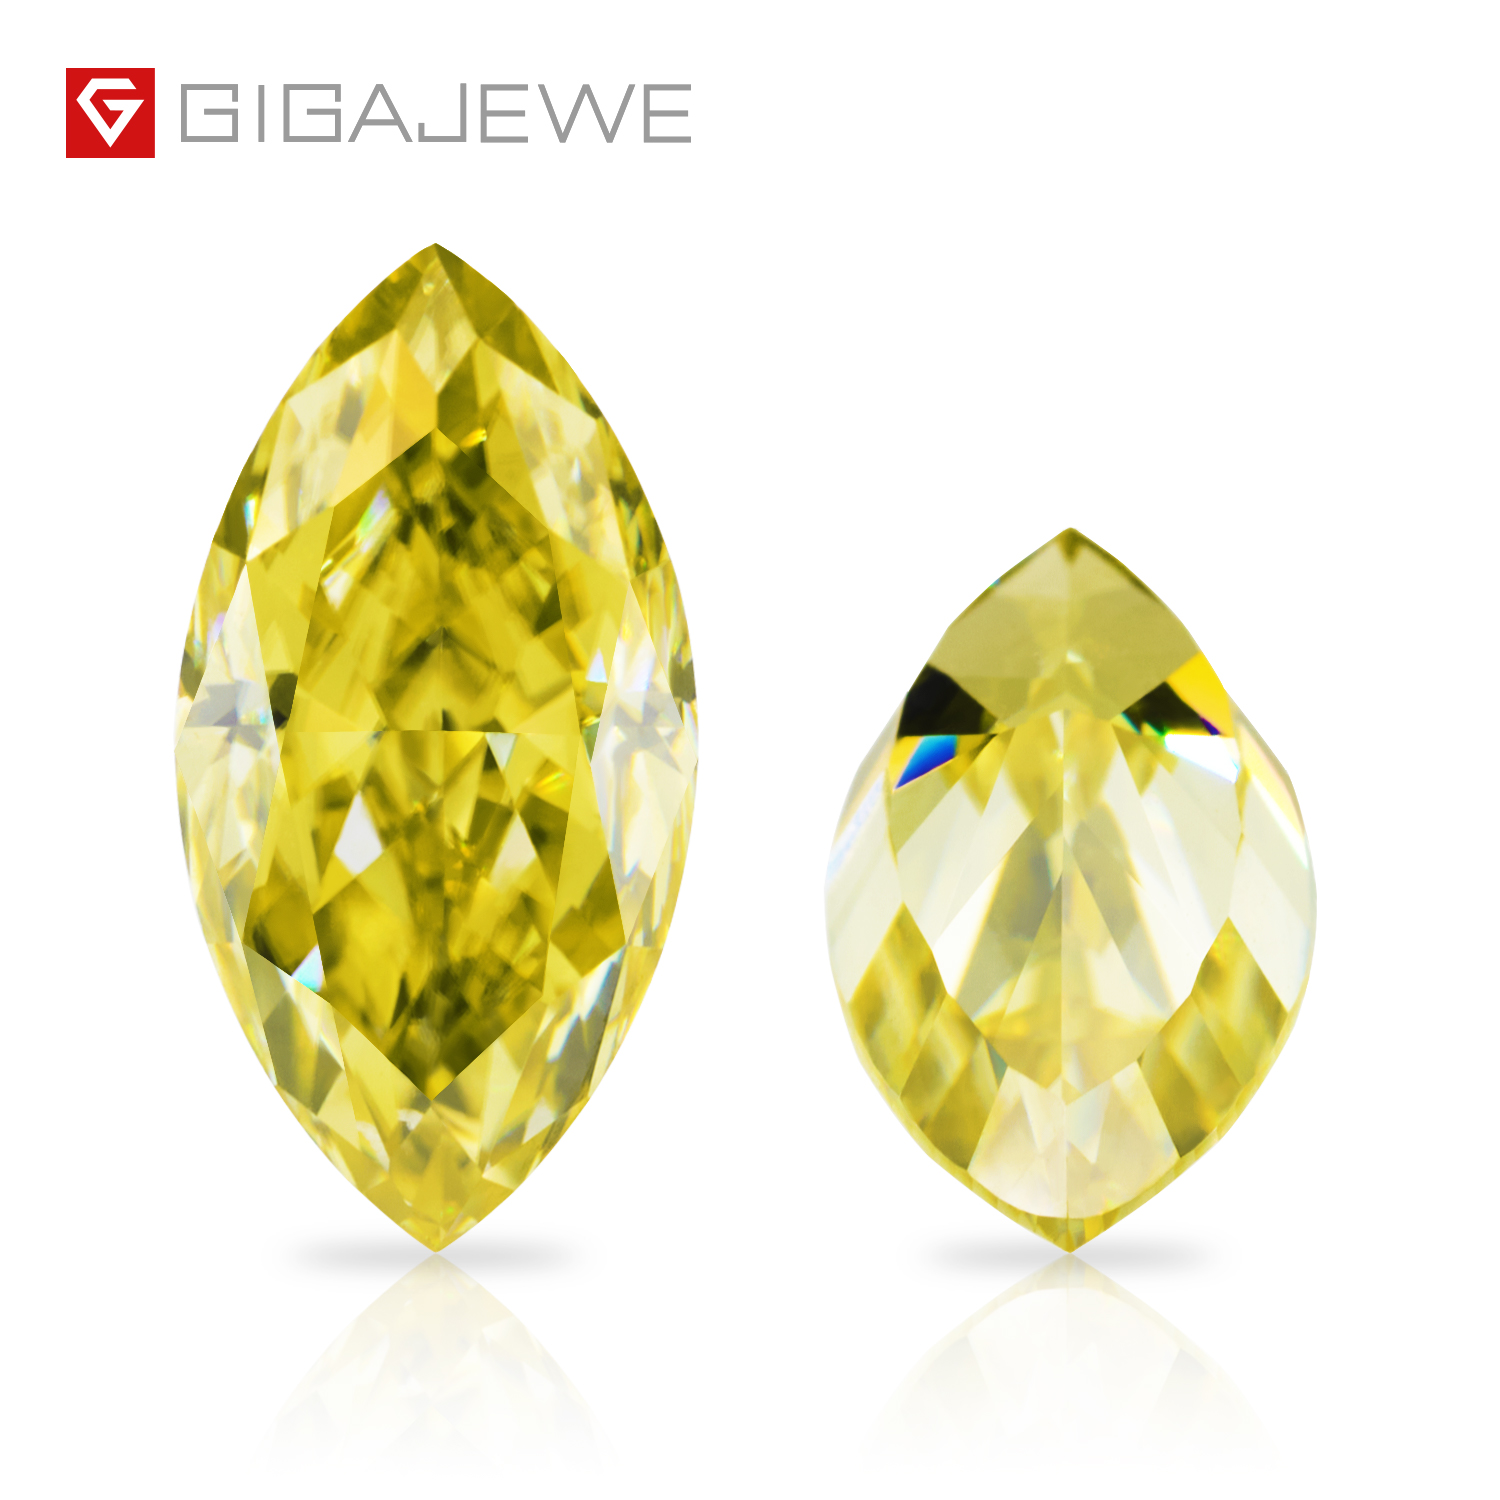 GIGAJEWE 定制碎冰马眼形切割鲜艳黄色 VVS1 莫桑石裸钻测试通过宝石用于珠宝制作